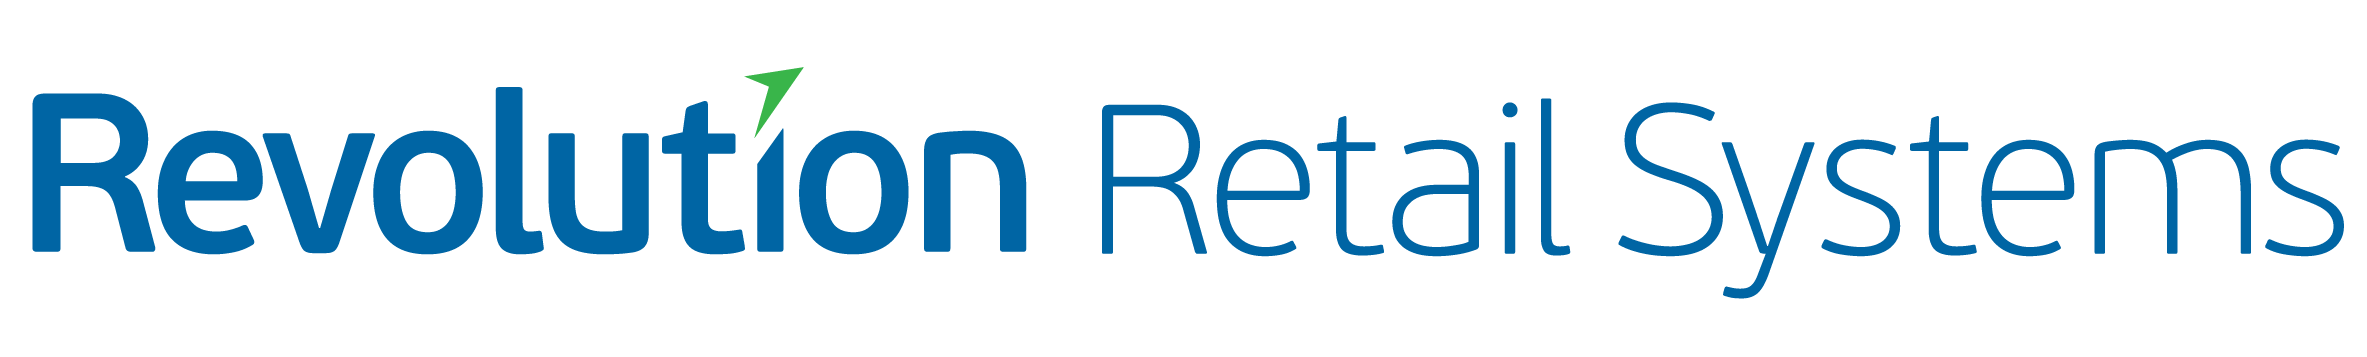 Revolution Retail Systems LLC Company Logo